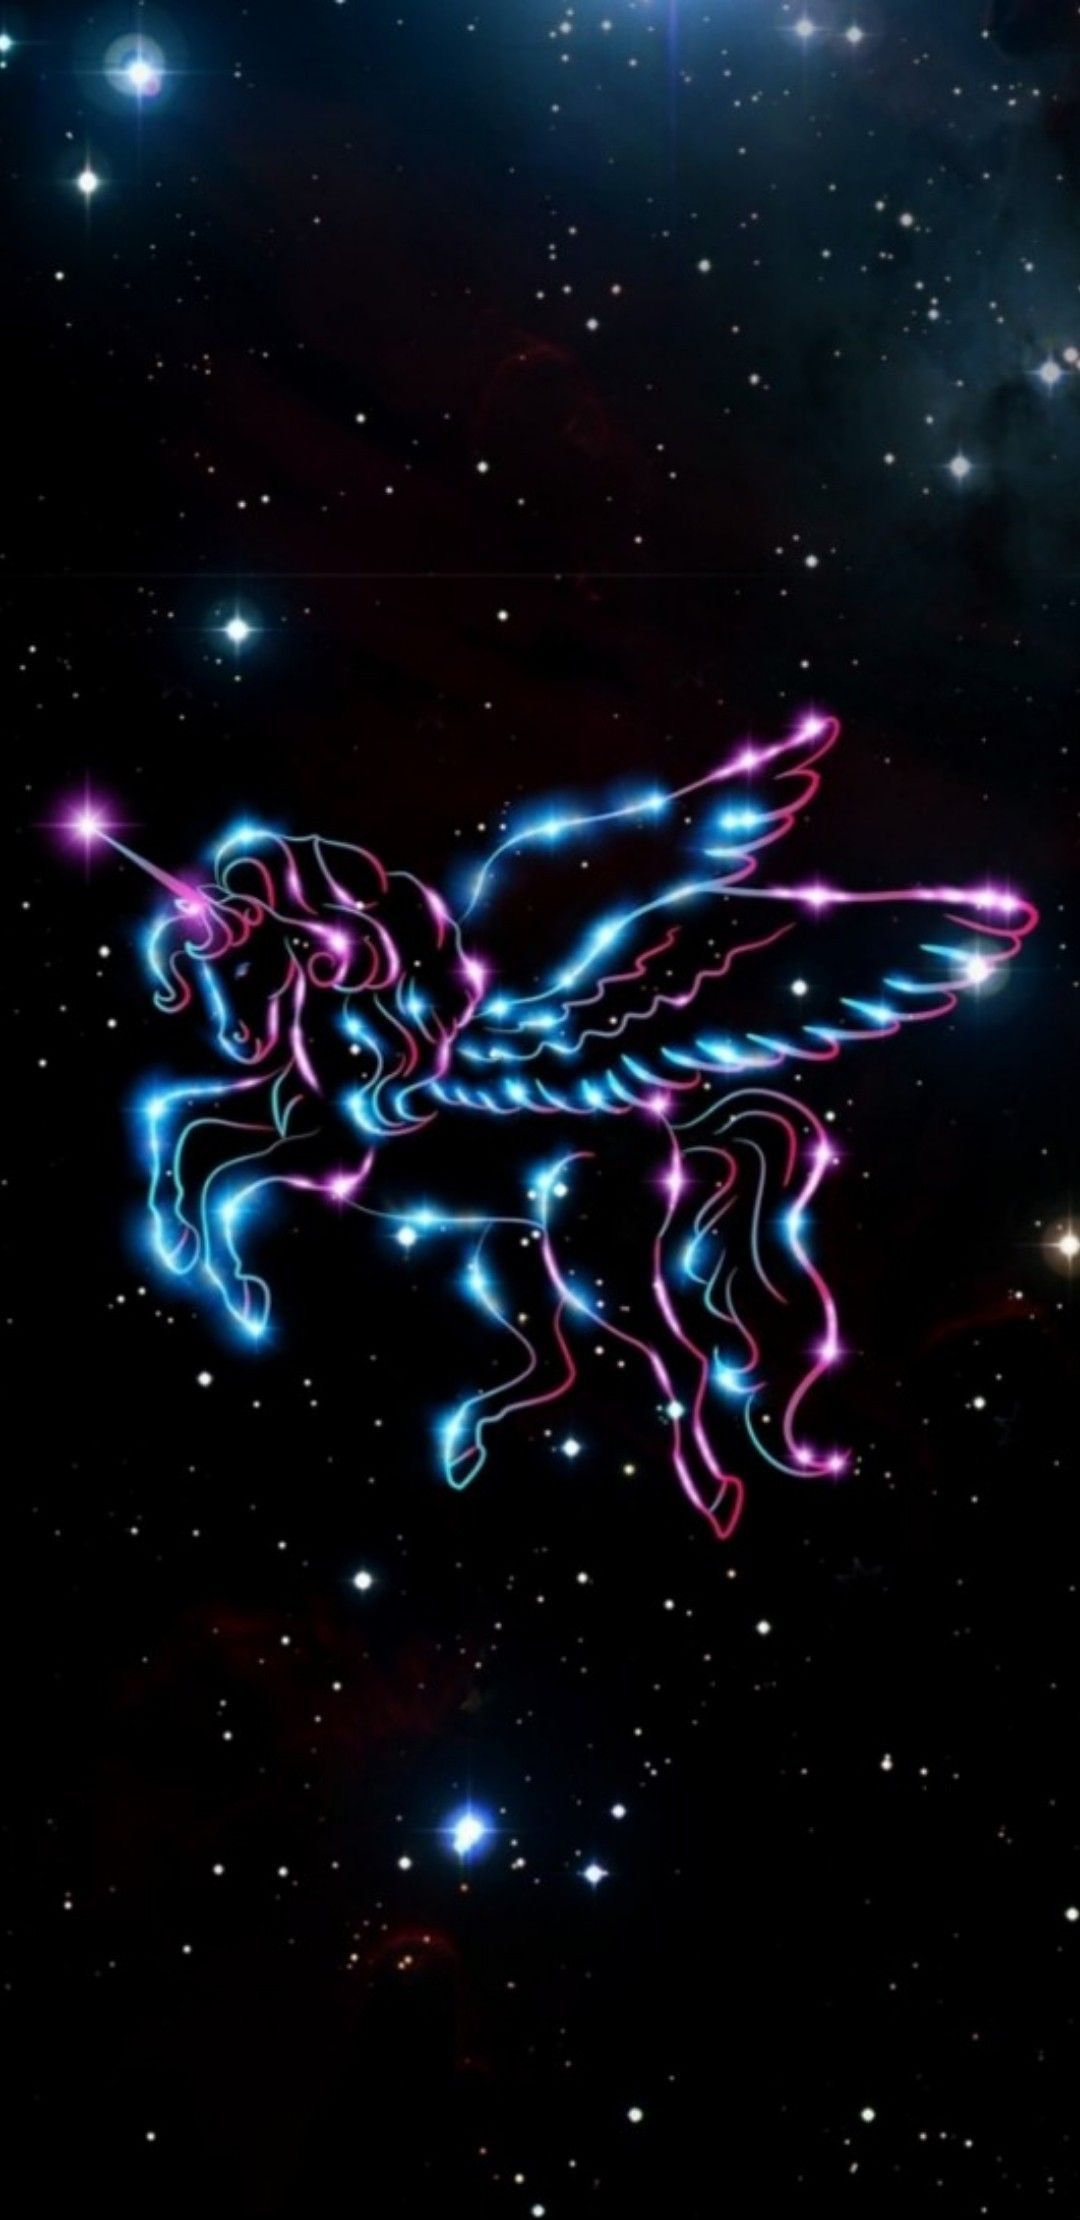 Bright / Glow Wallpaper. iPhone wallpaper unicorn, Dragon wallpaper iphone, Unicorn wallpaper